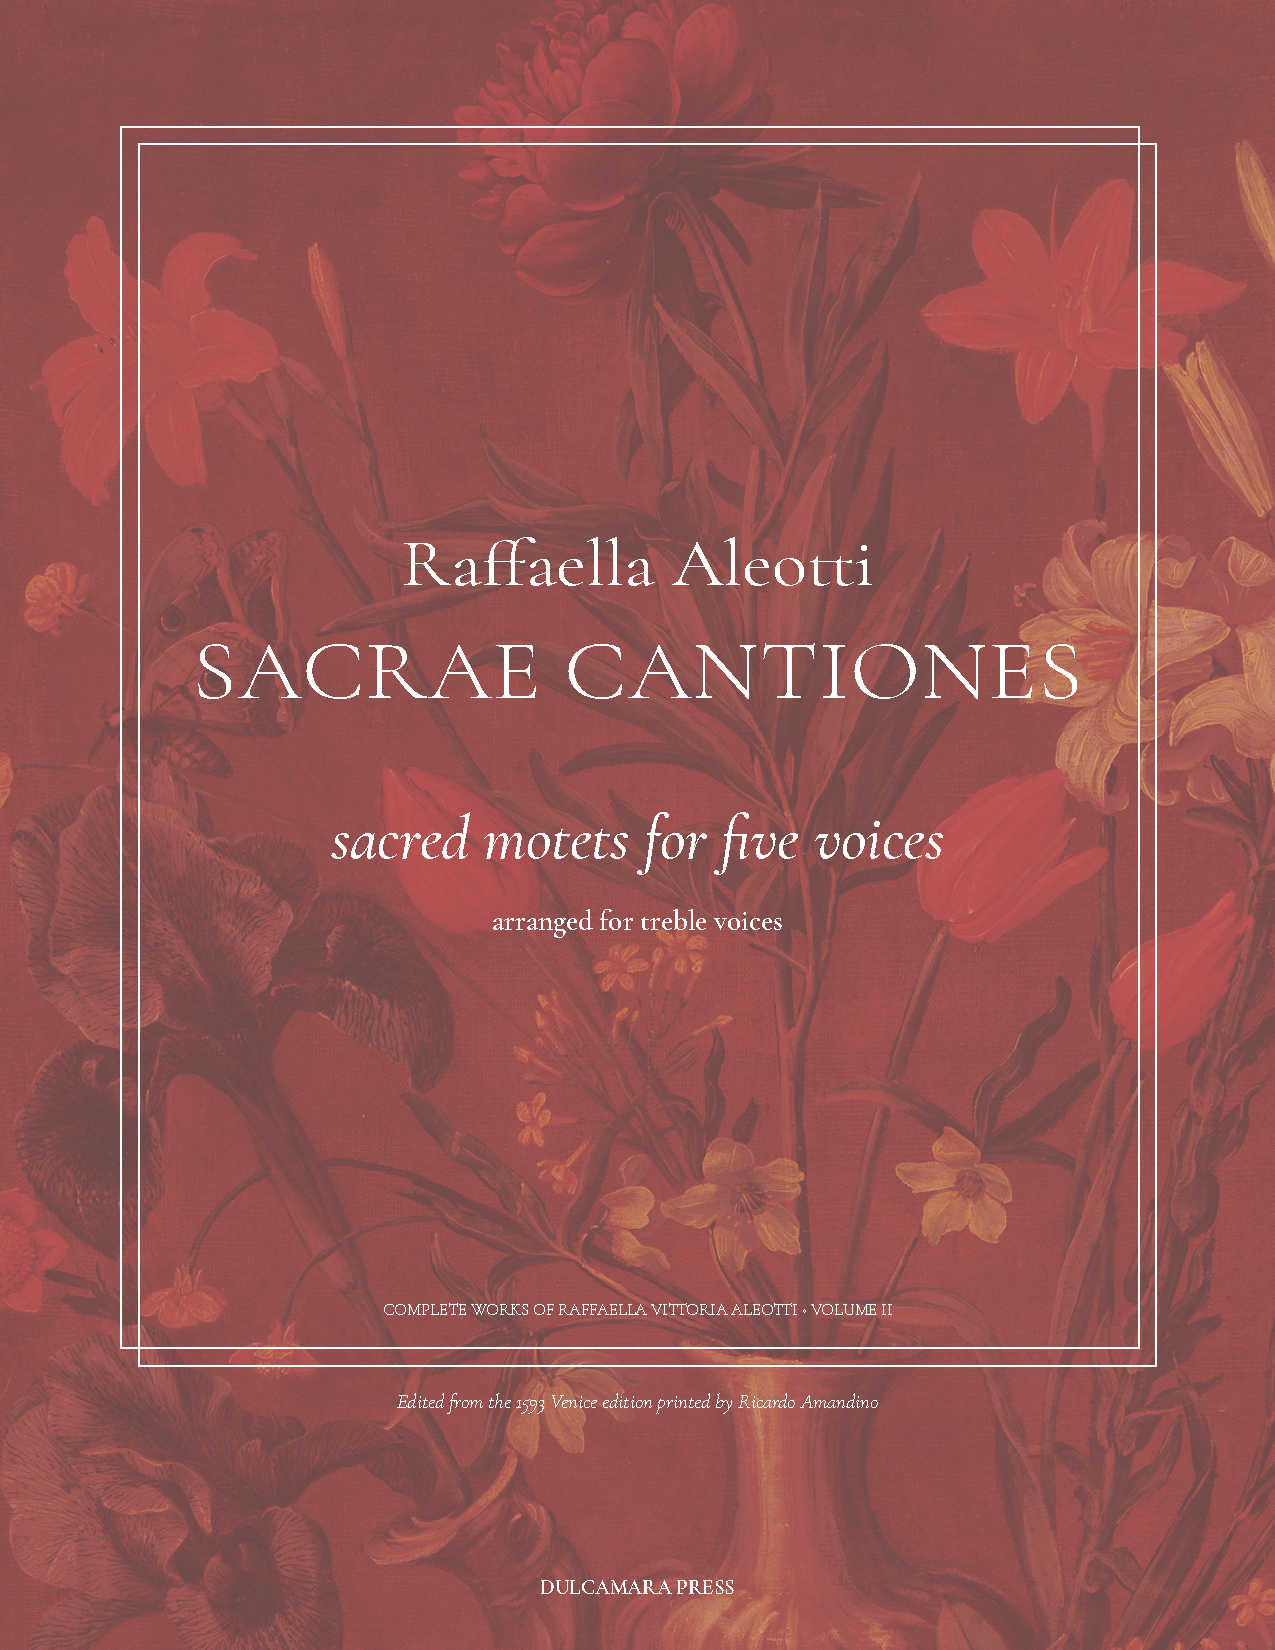 cover image for Raffaella Aleotti Sacrae Cantiones voume 2.